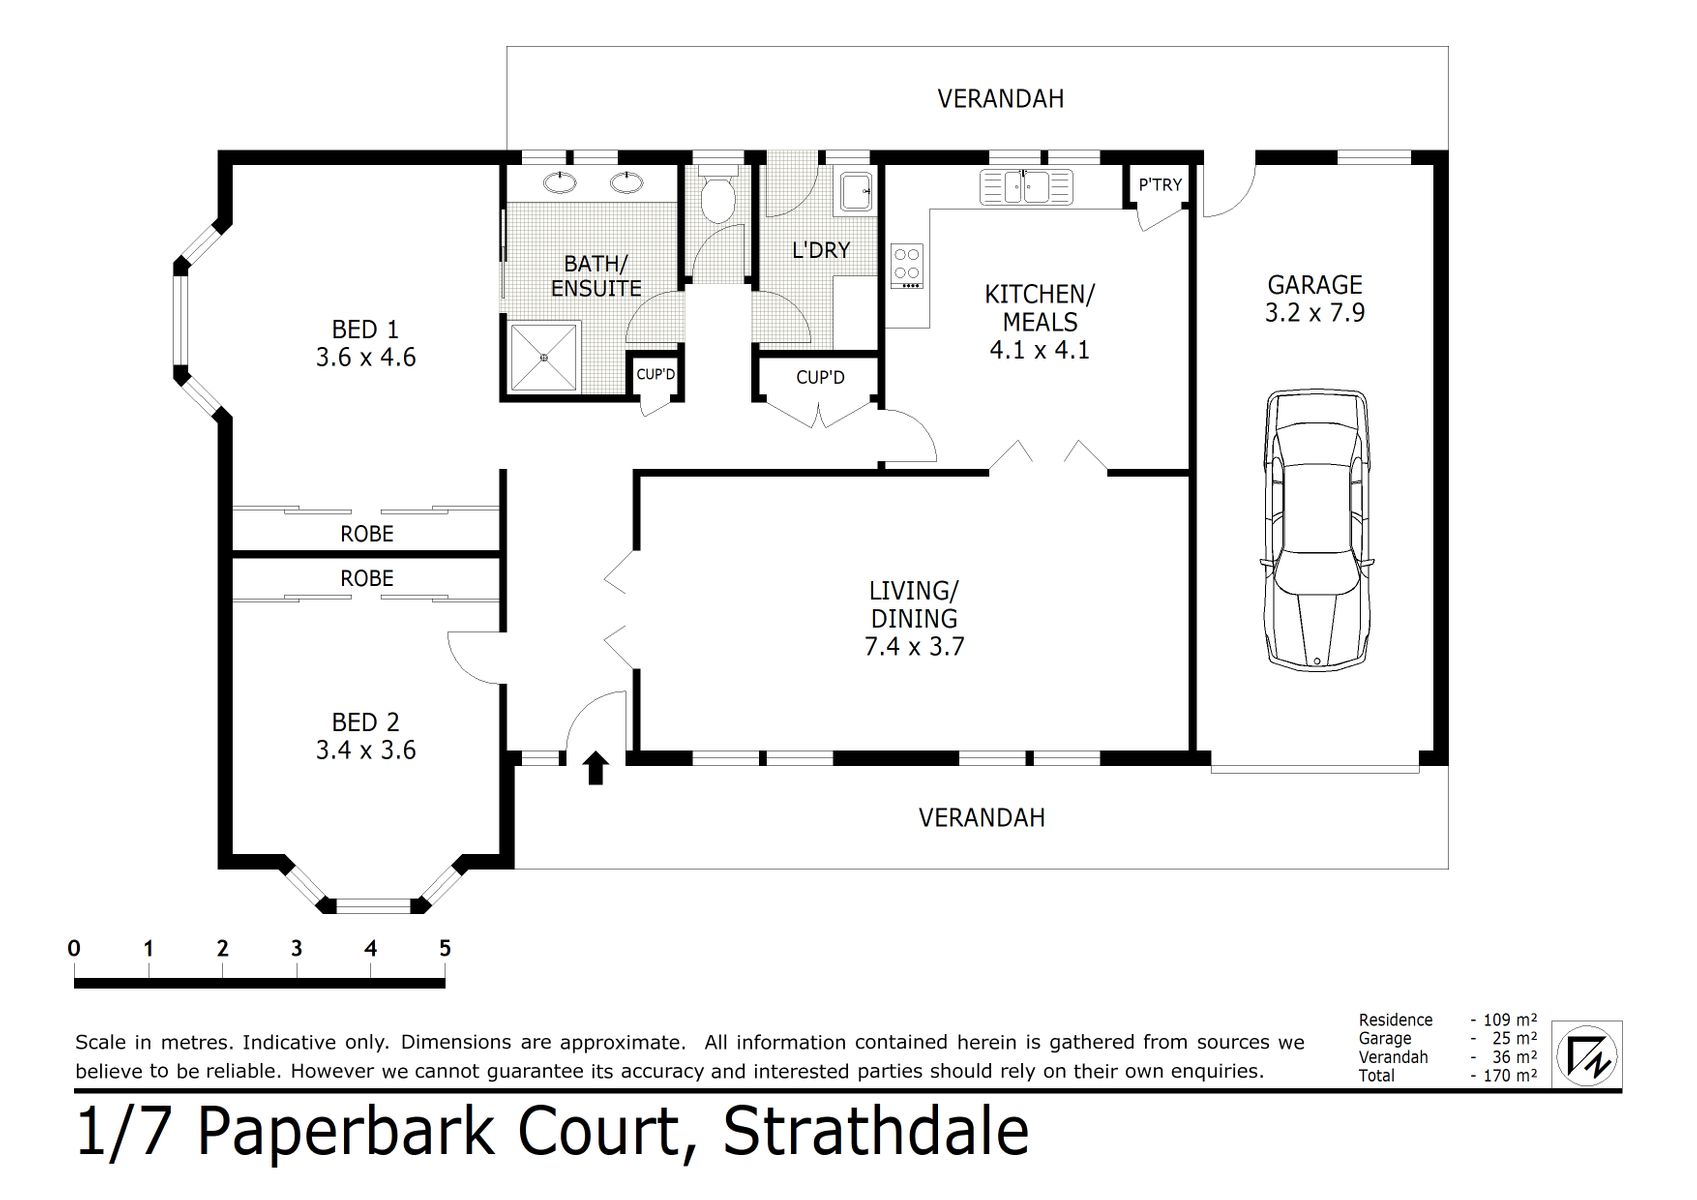 1 7 Paperbark Court Strathdale (07 APR 2021) 134sqm